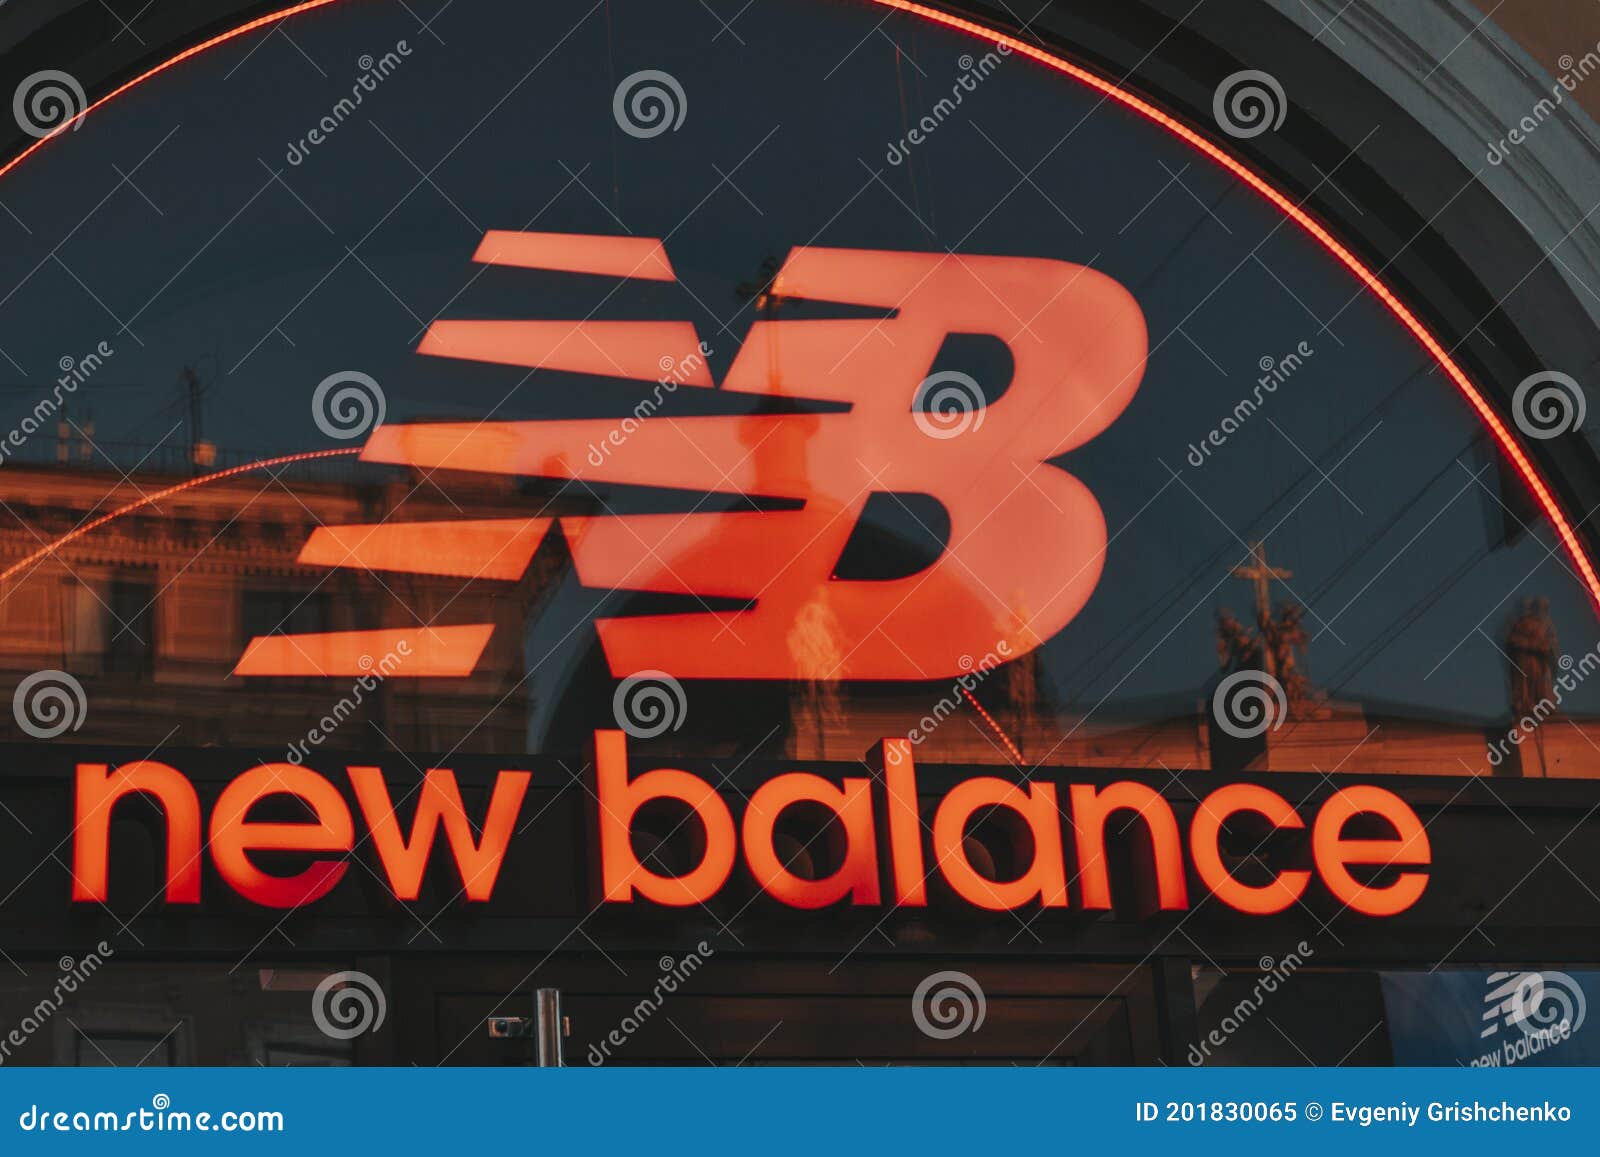 New Balance Logo Sign Footwear Shop Black Friday Sale Editorial Image ...